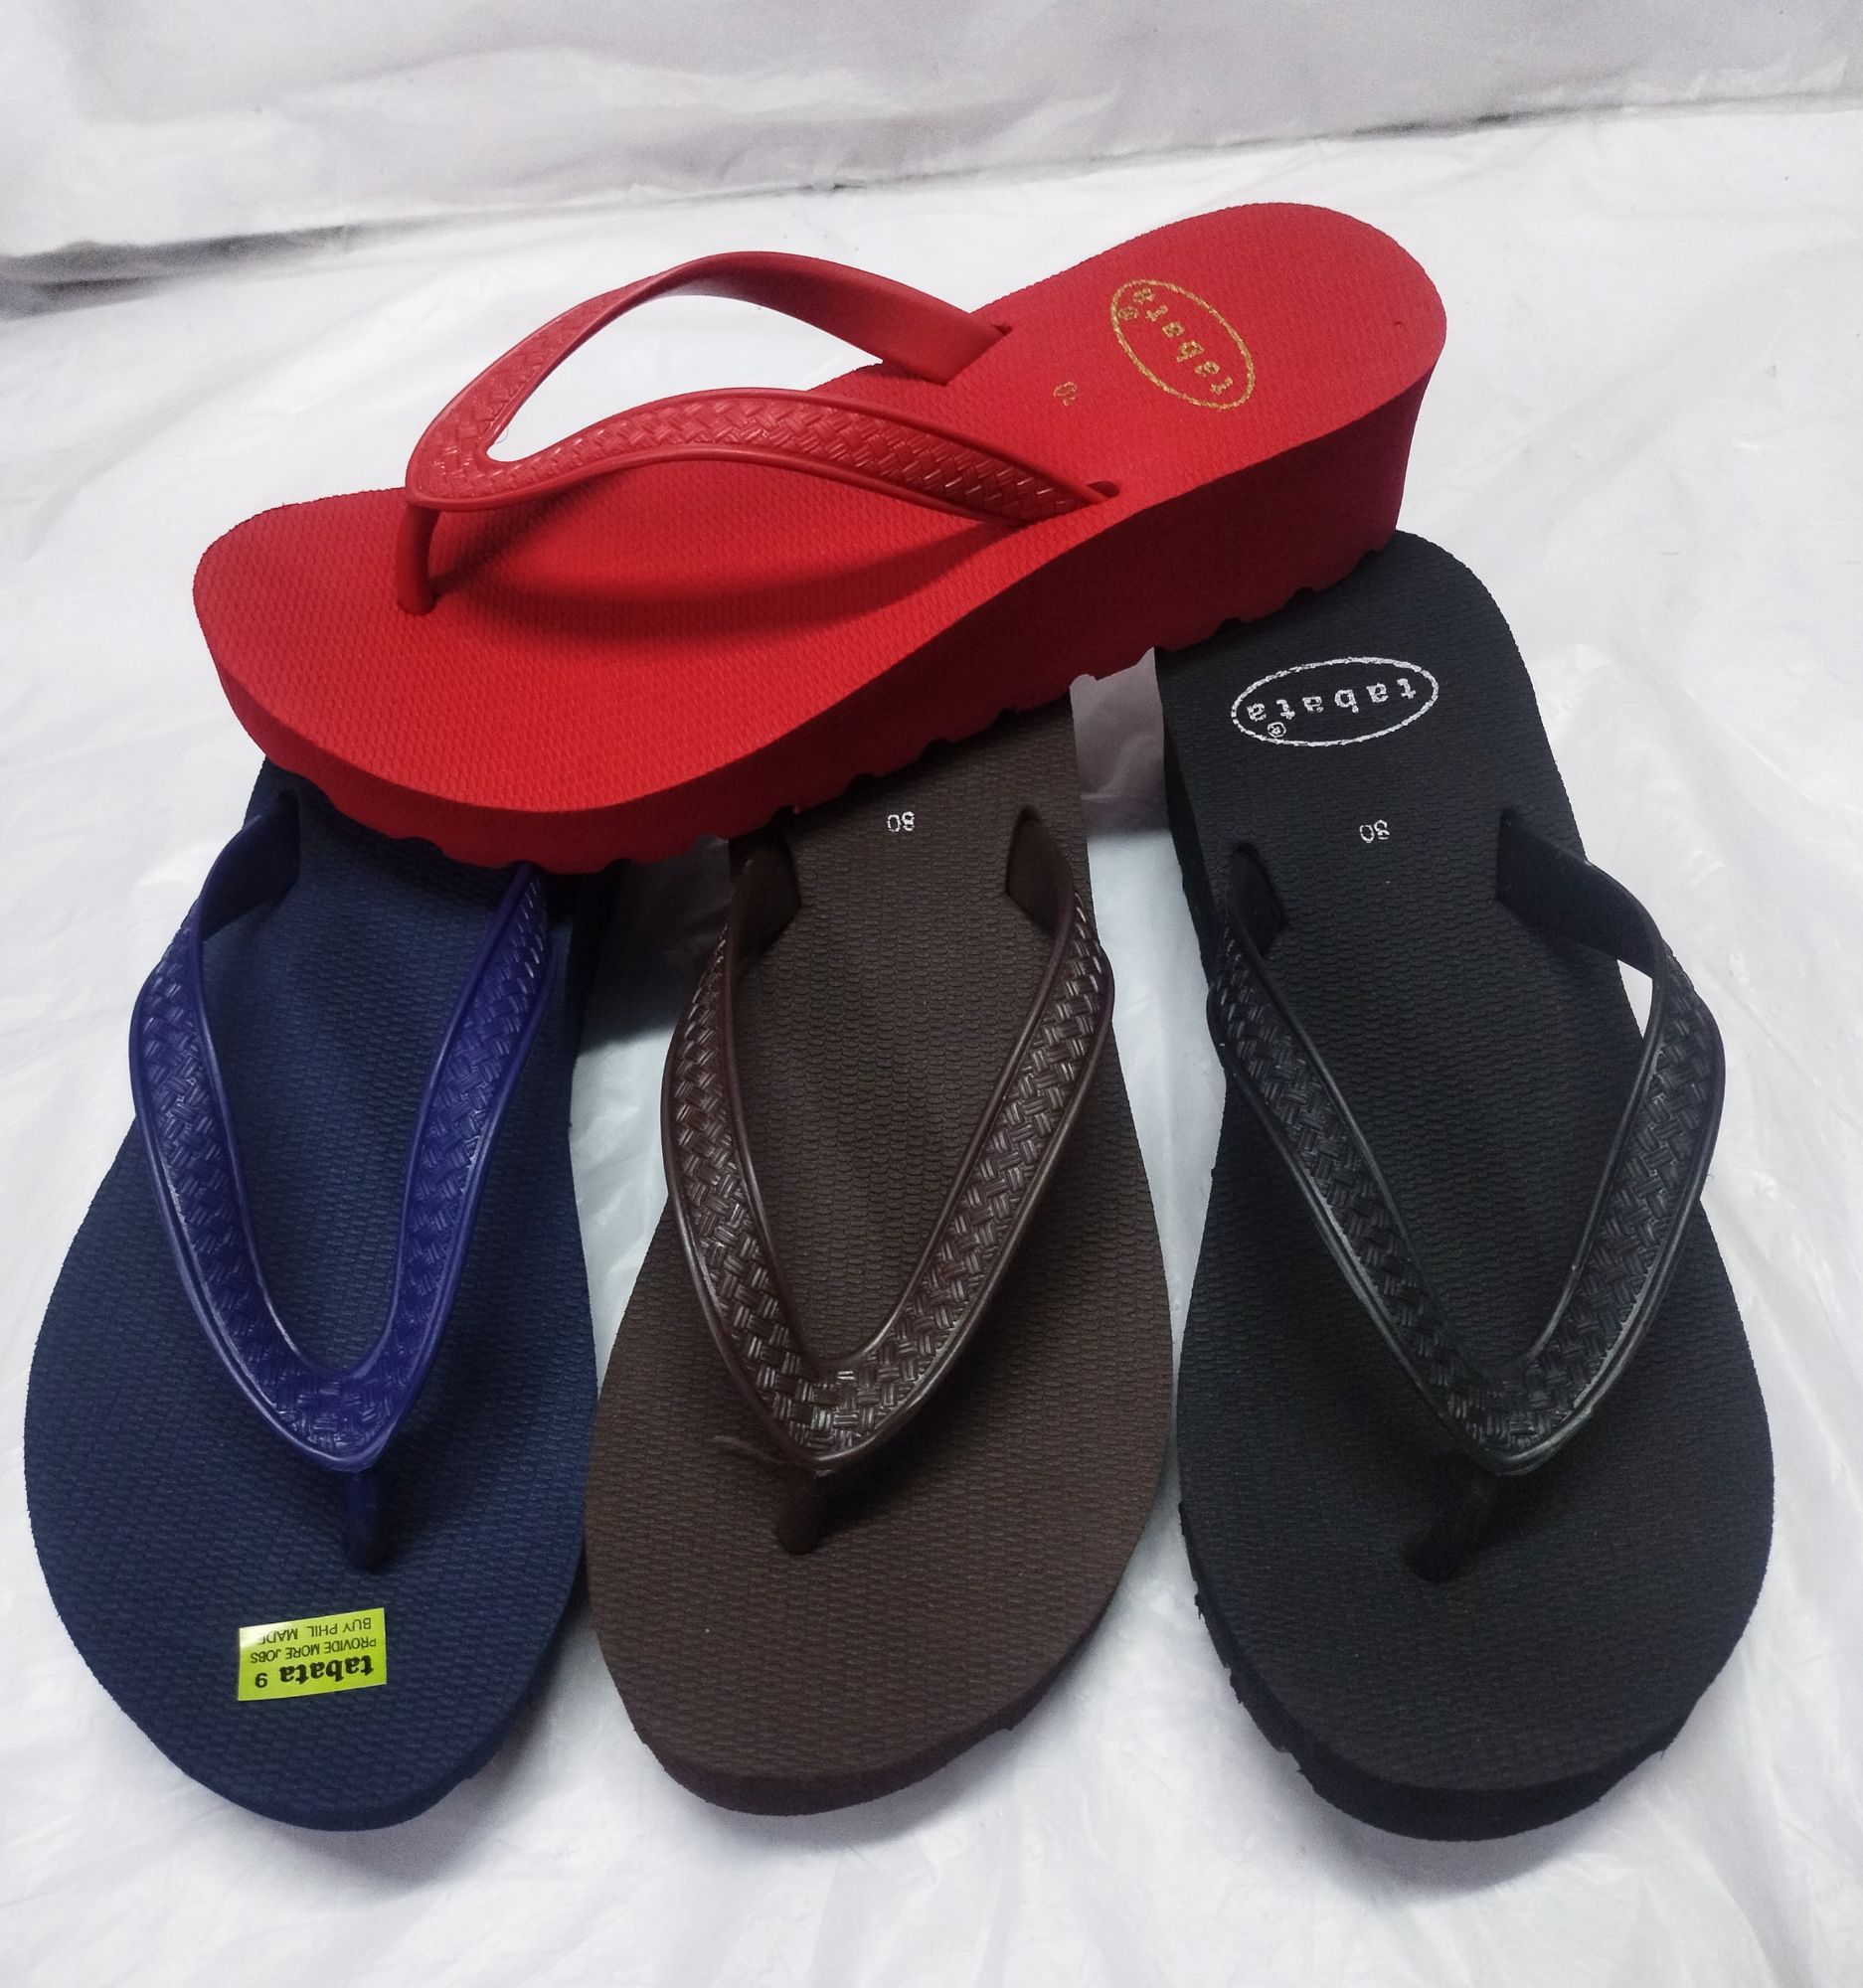 Tabata Rainy slippers (wedge) for Ladies Locally made | Lazada PH